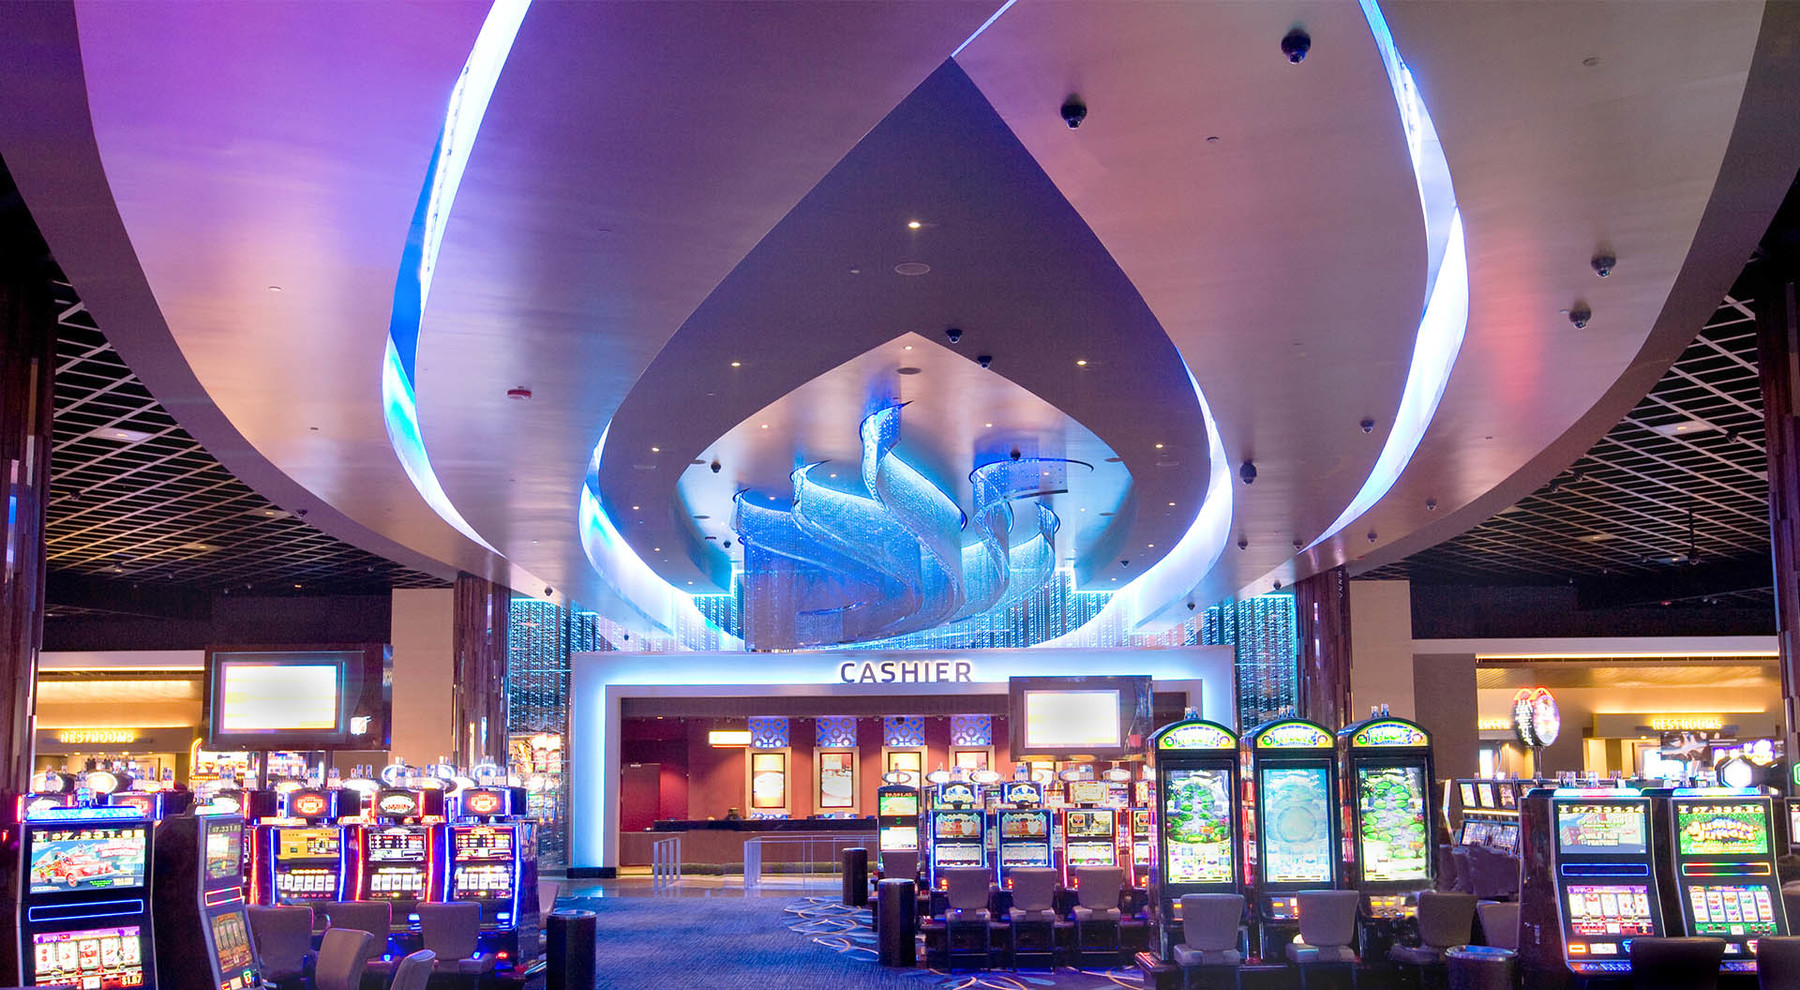 The #1 kiowa casino Mistake, Plus 7 More Lessons